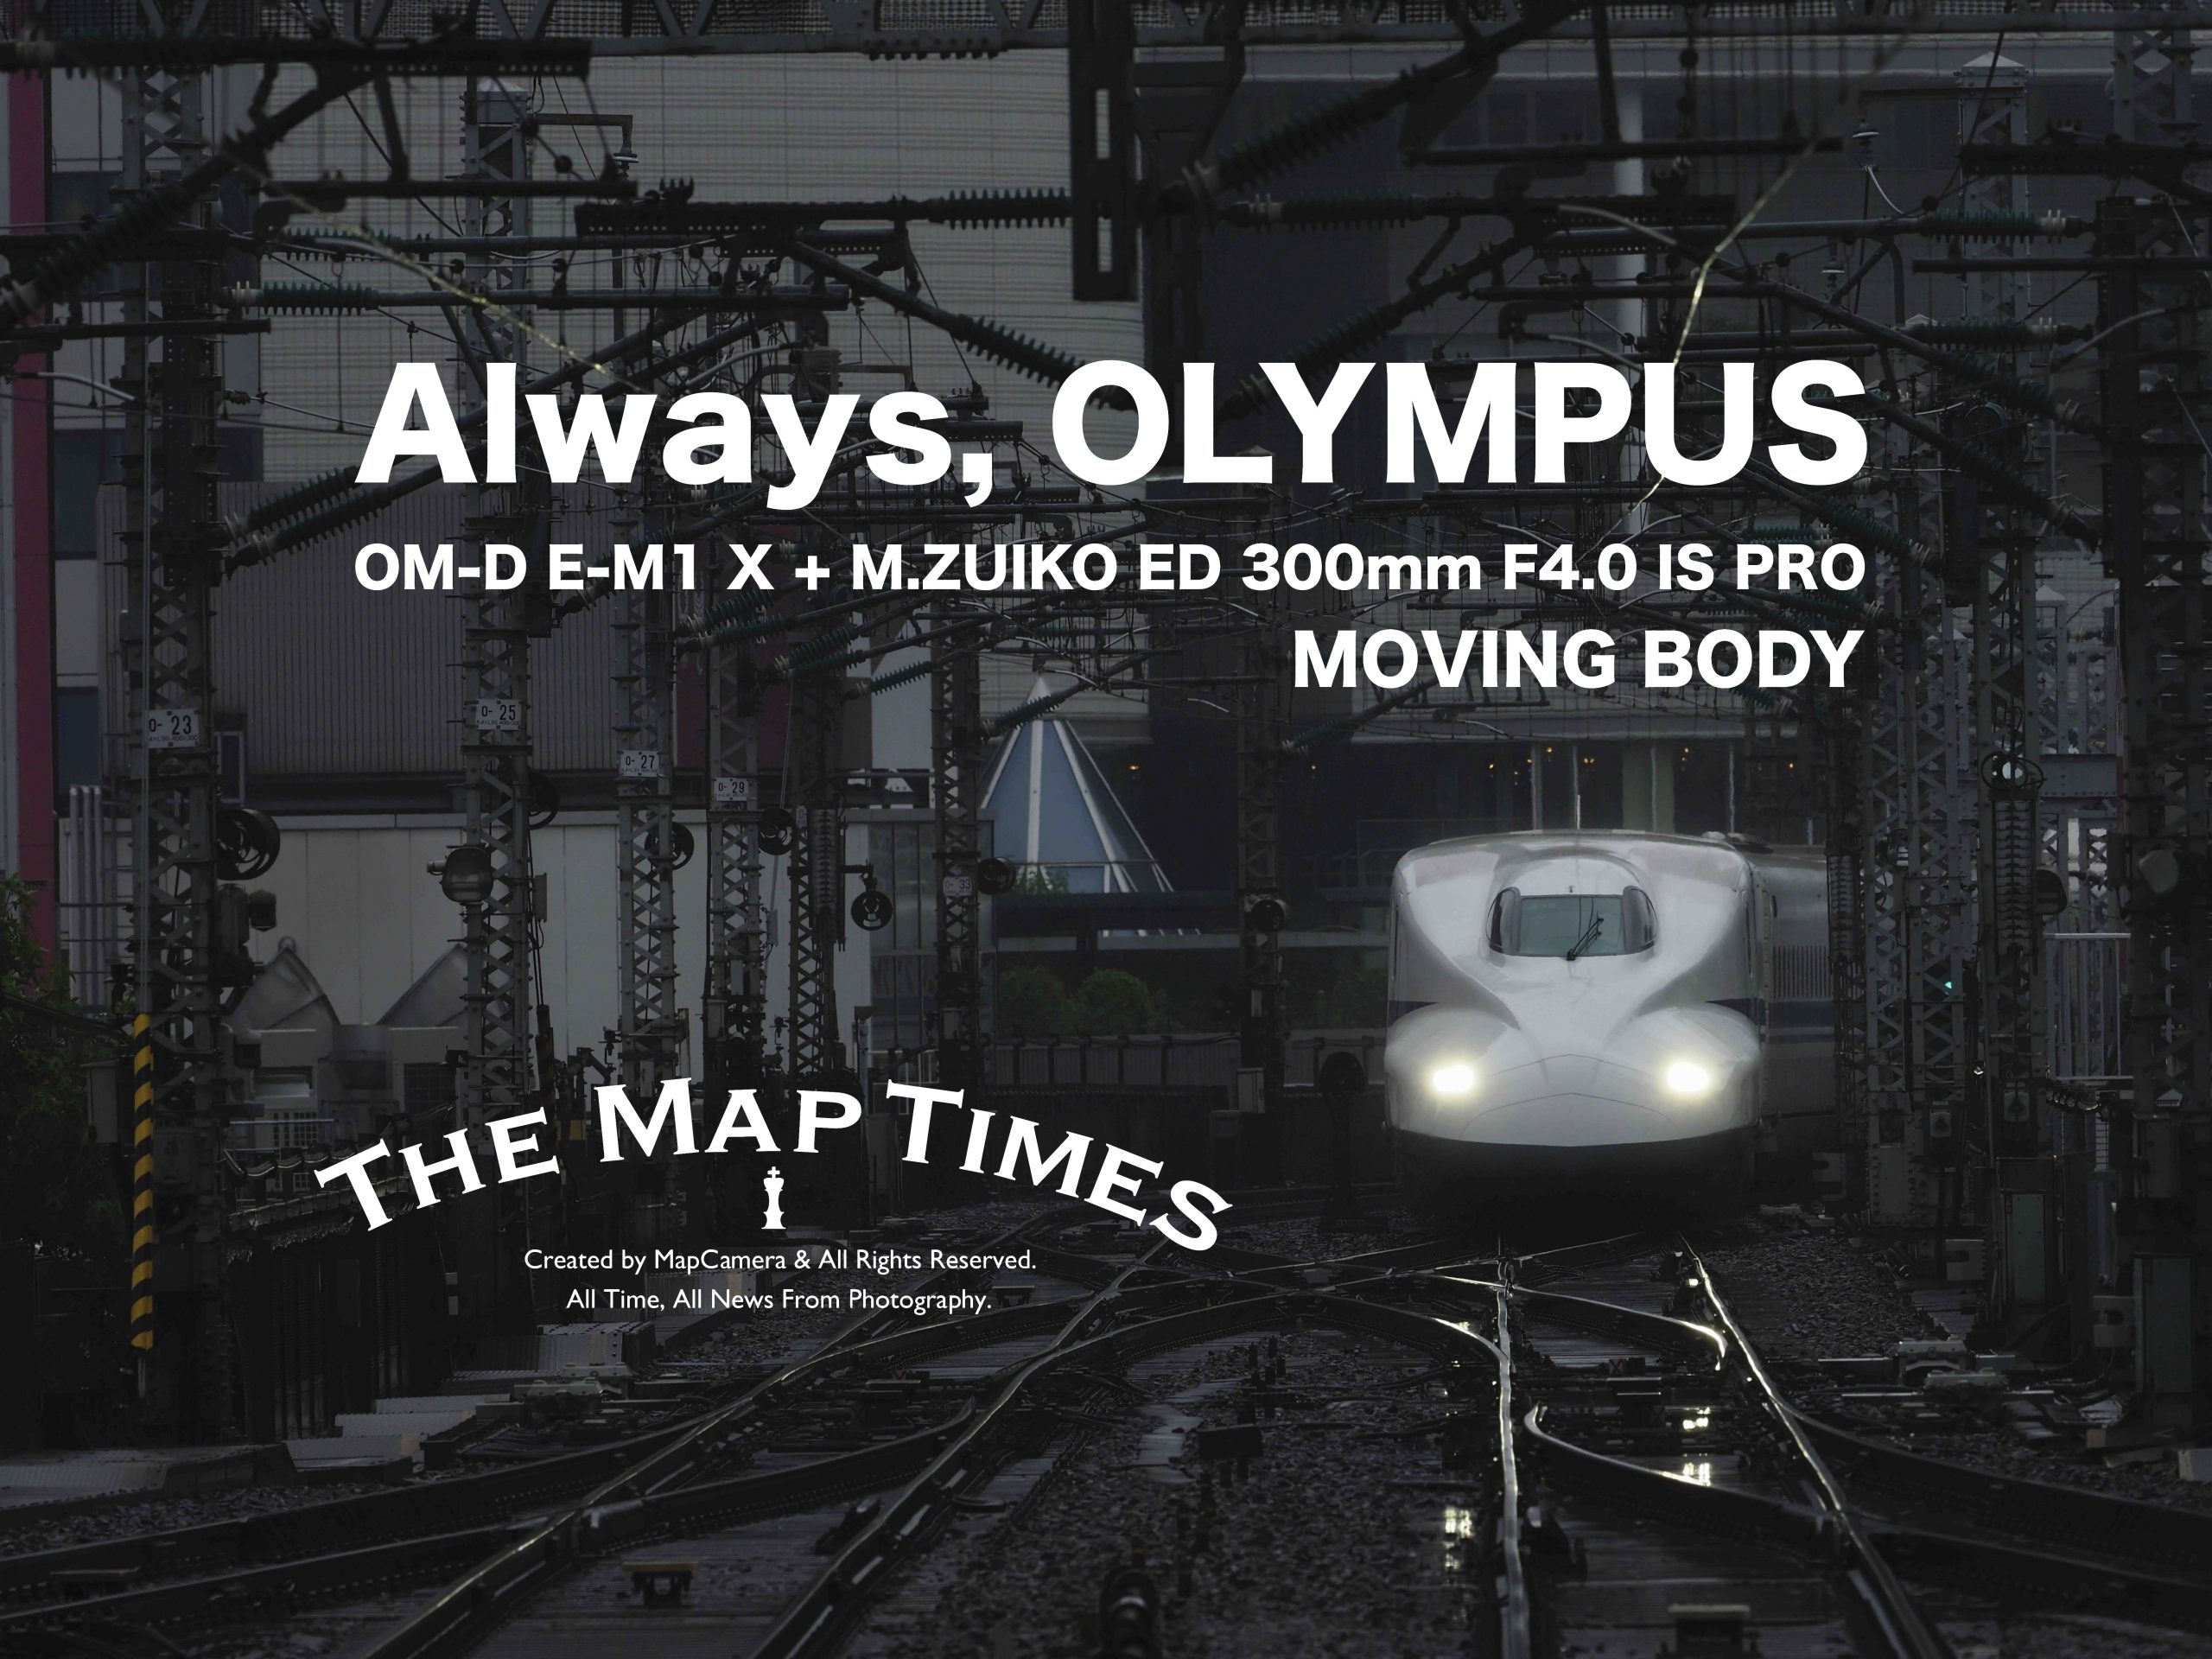 【OLYMPUS】Always, OLYMPUS Ver. OM-D E-M1X